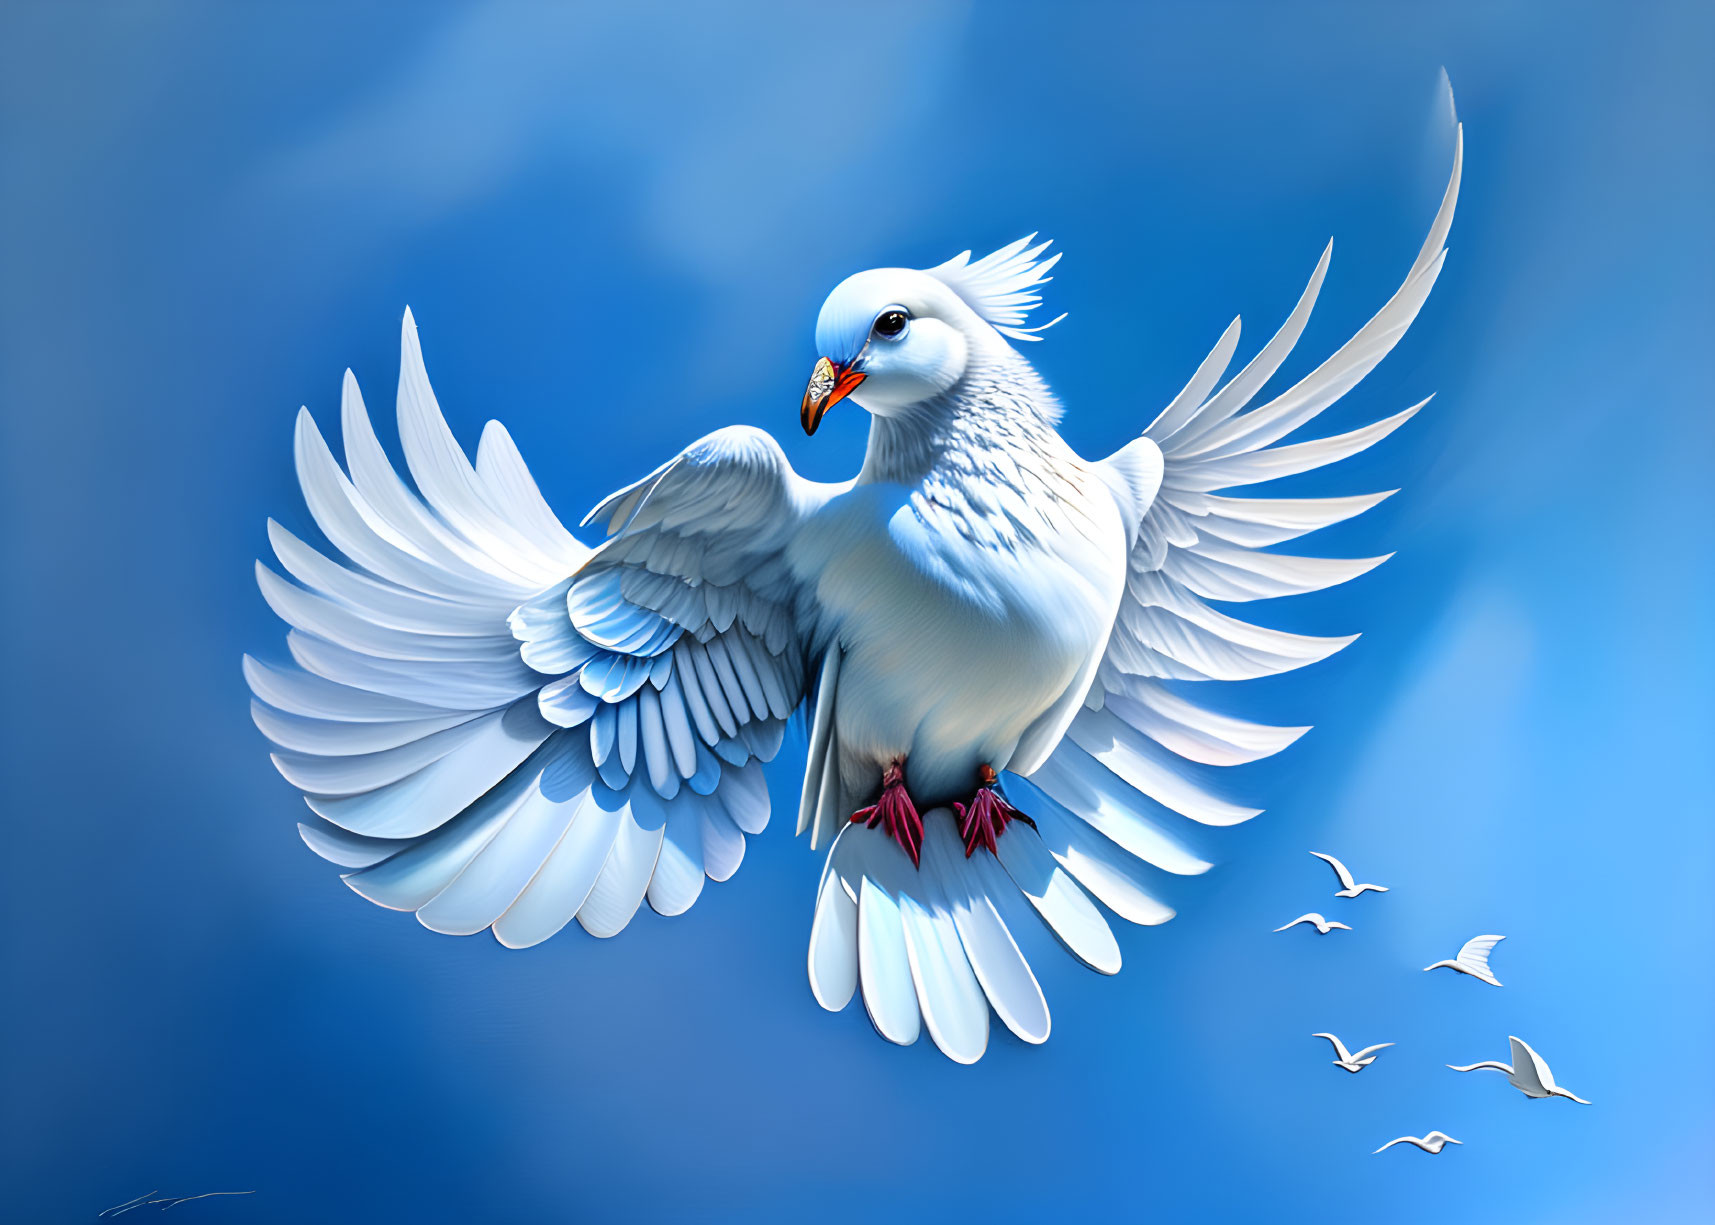 White dove flying in blue sky with flock of birds - Digital illustration